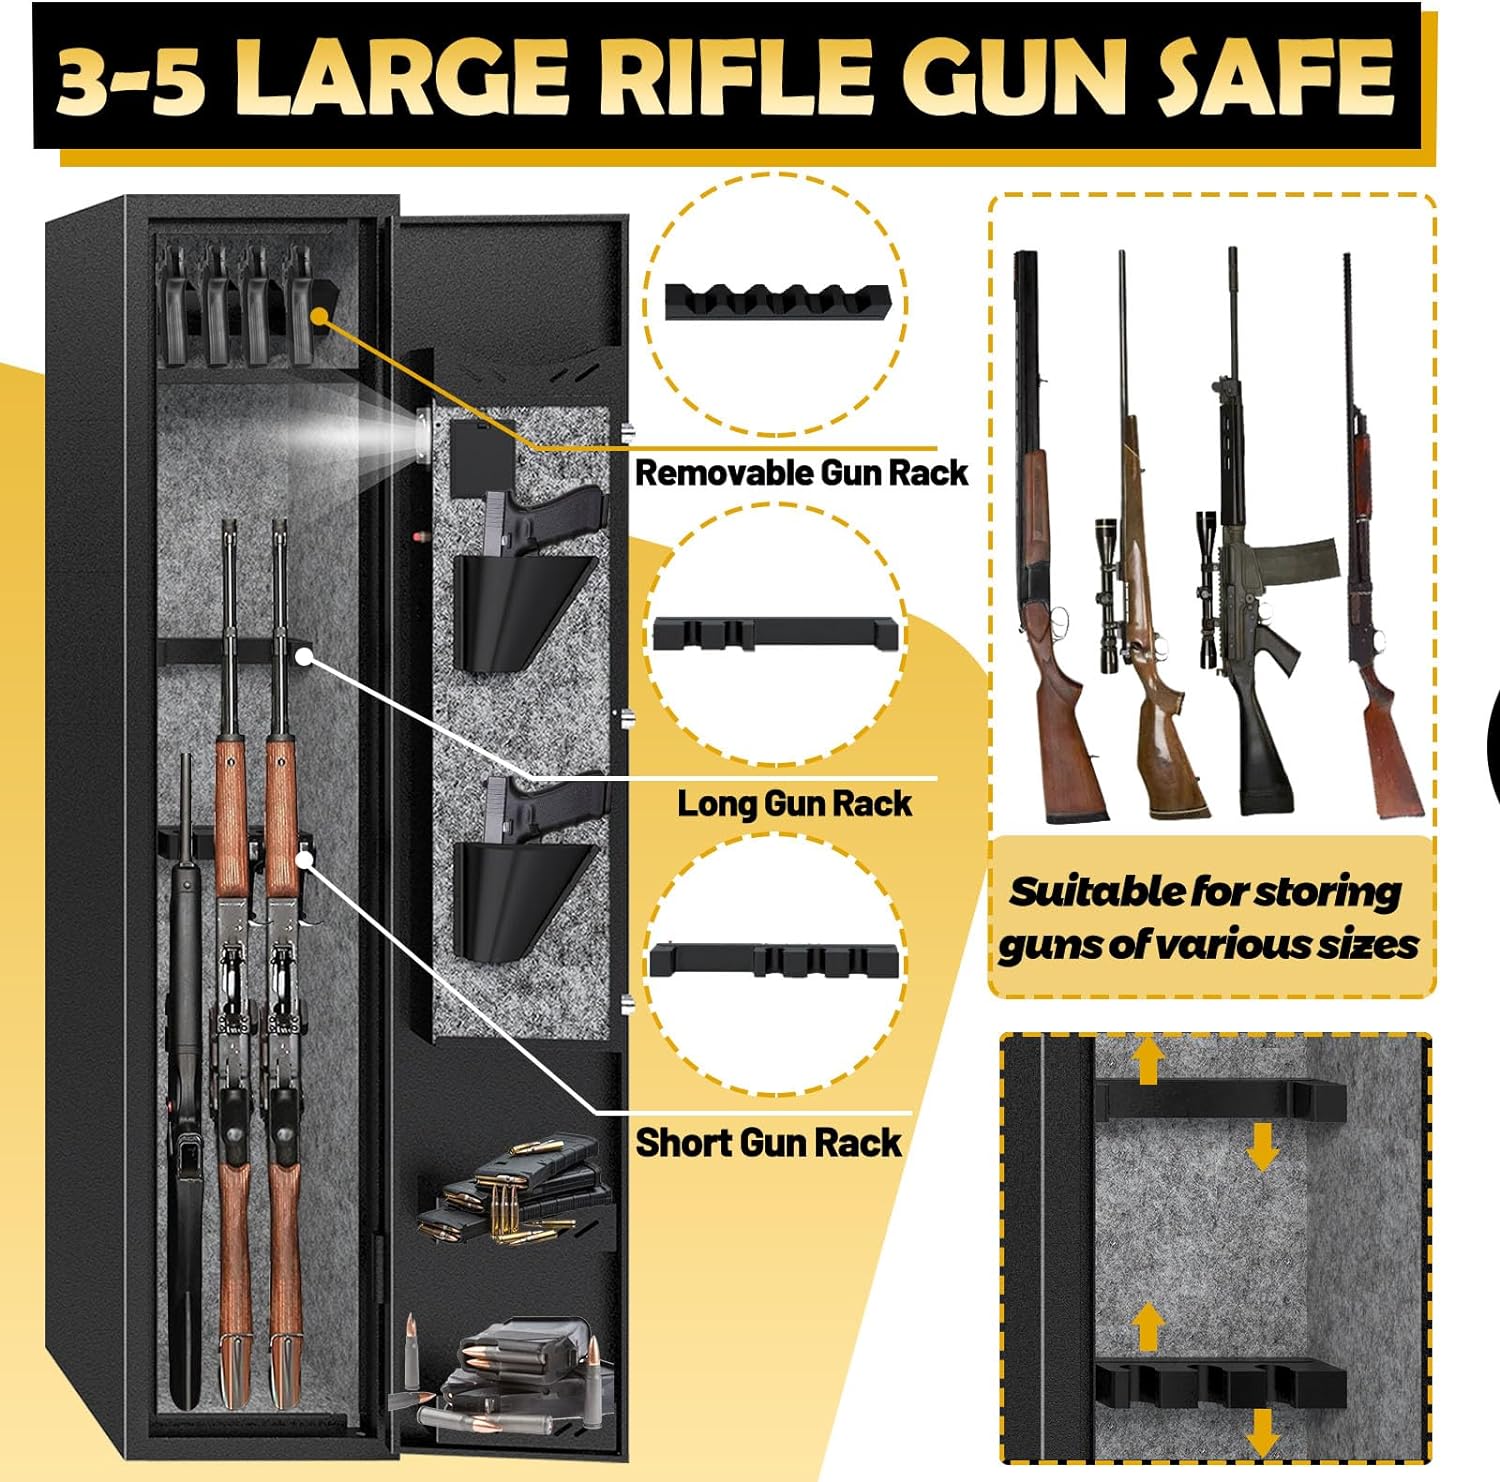 KAER Gun Safe,Rifle Safe,4-5 Gun Safes for Home Rifle and Pistols11.8" x11" x 54.3" - $140